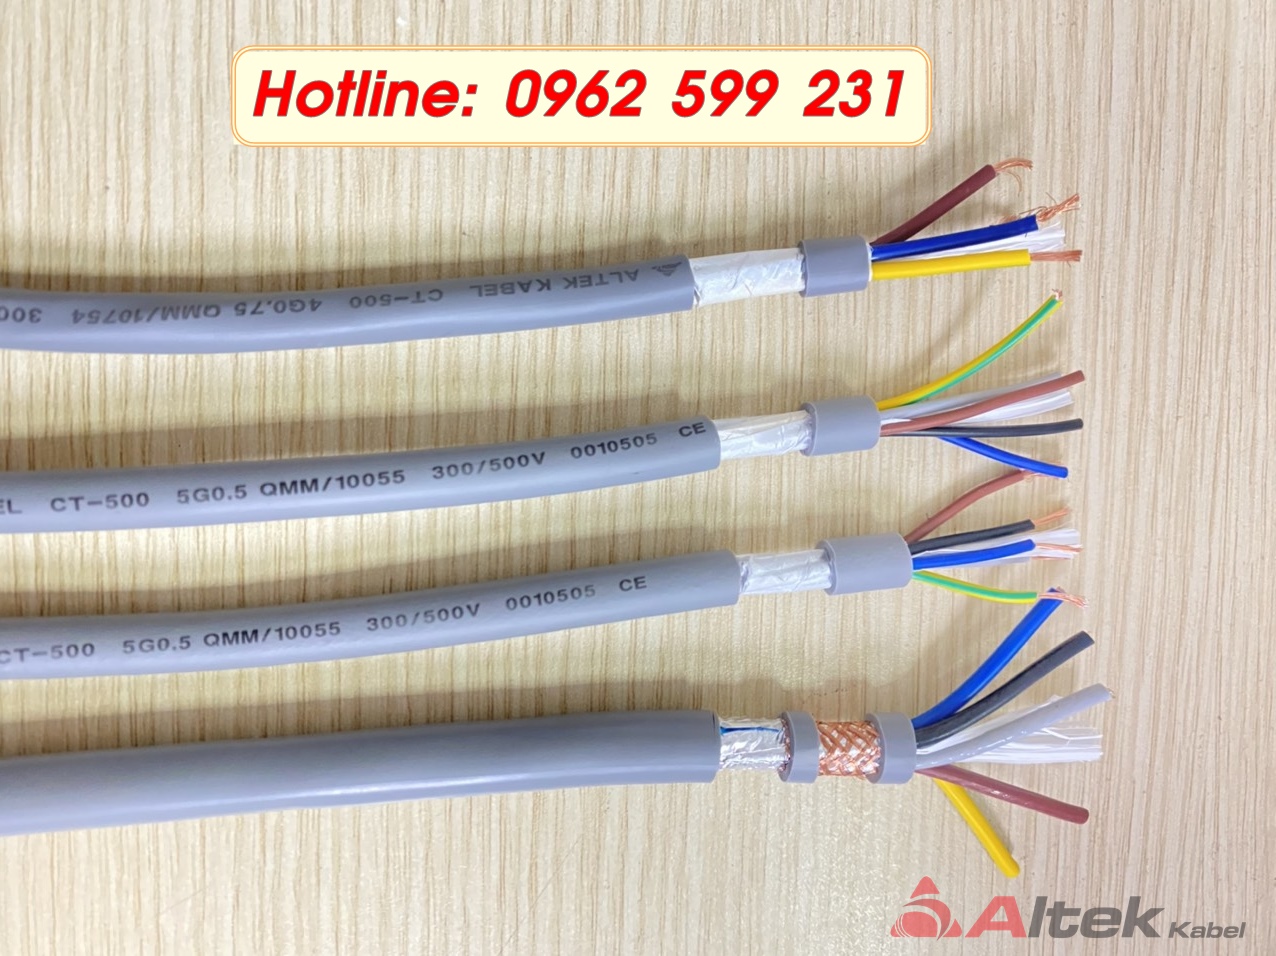 Cáp điều khiển 5 lõi Altek kabel SH-500 0.5 đến 1.5 mm2